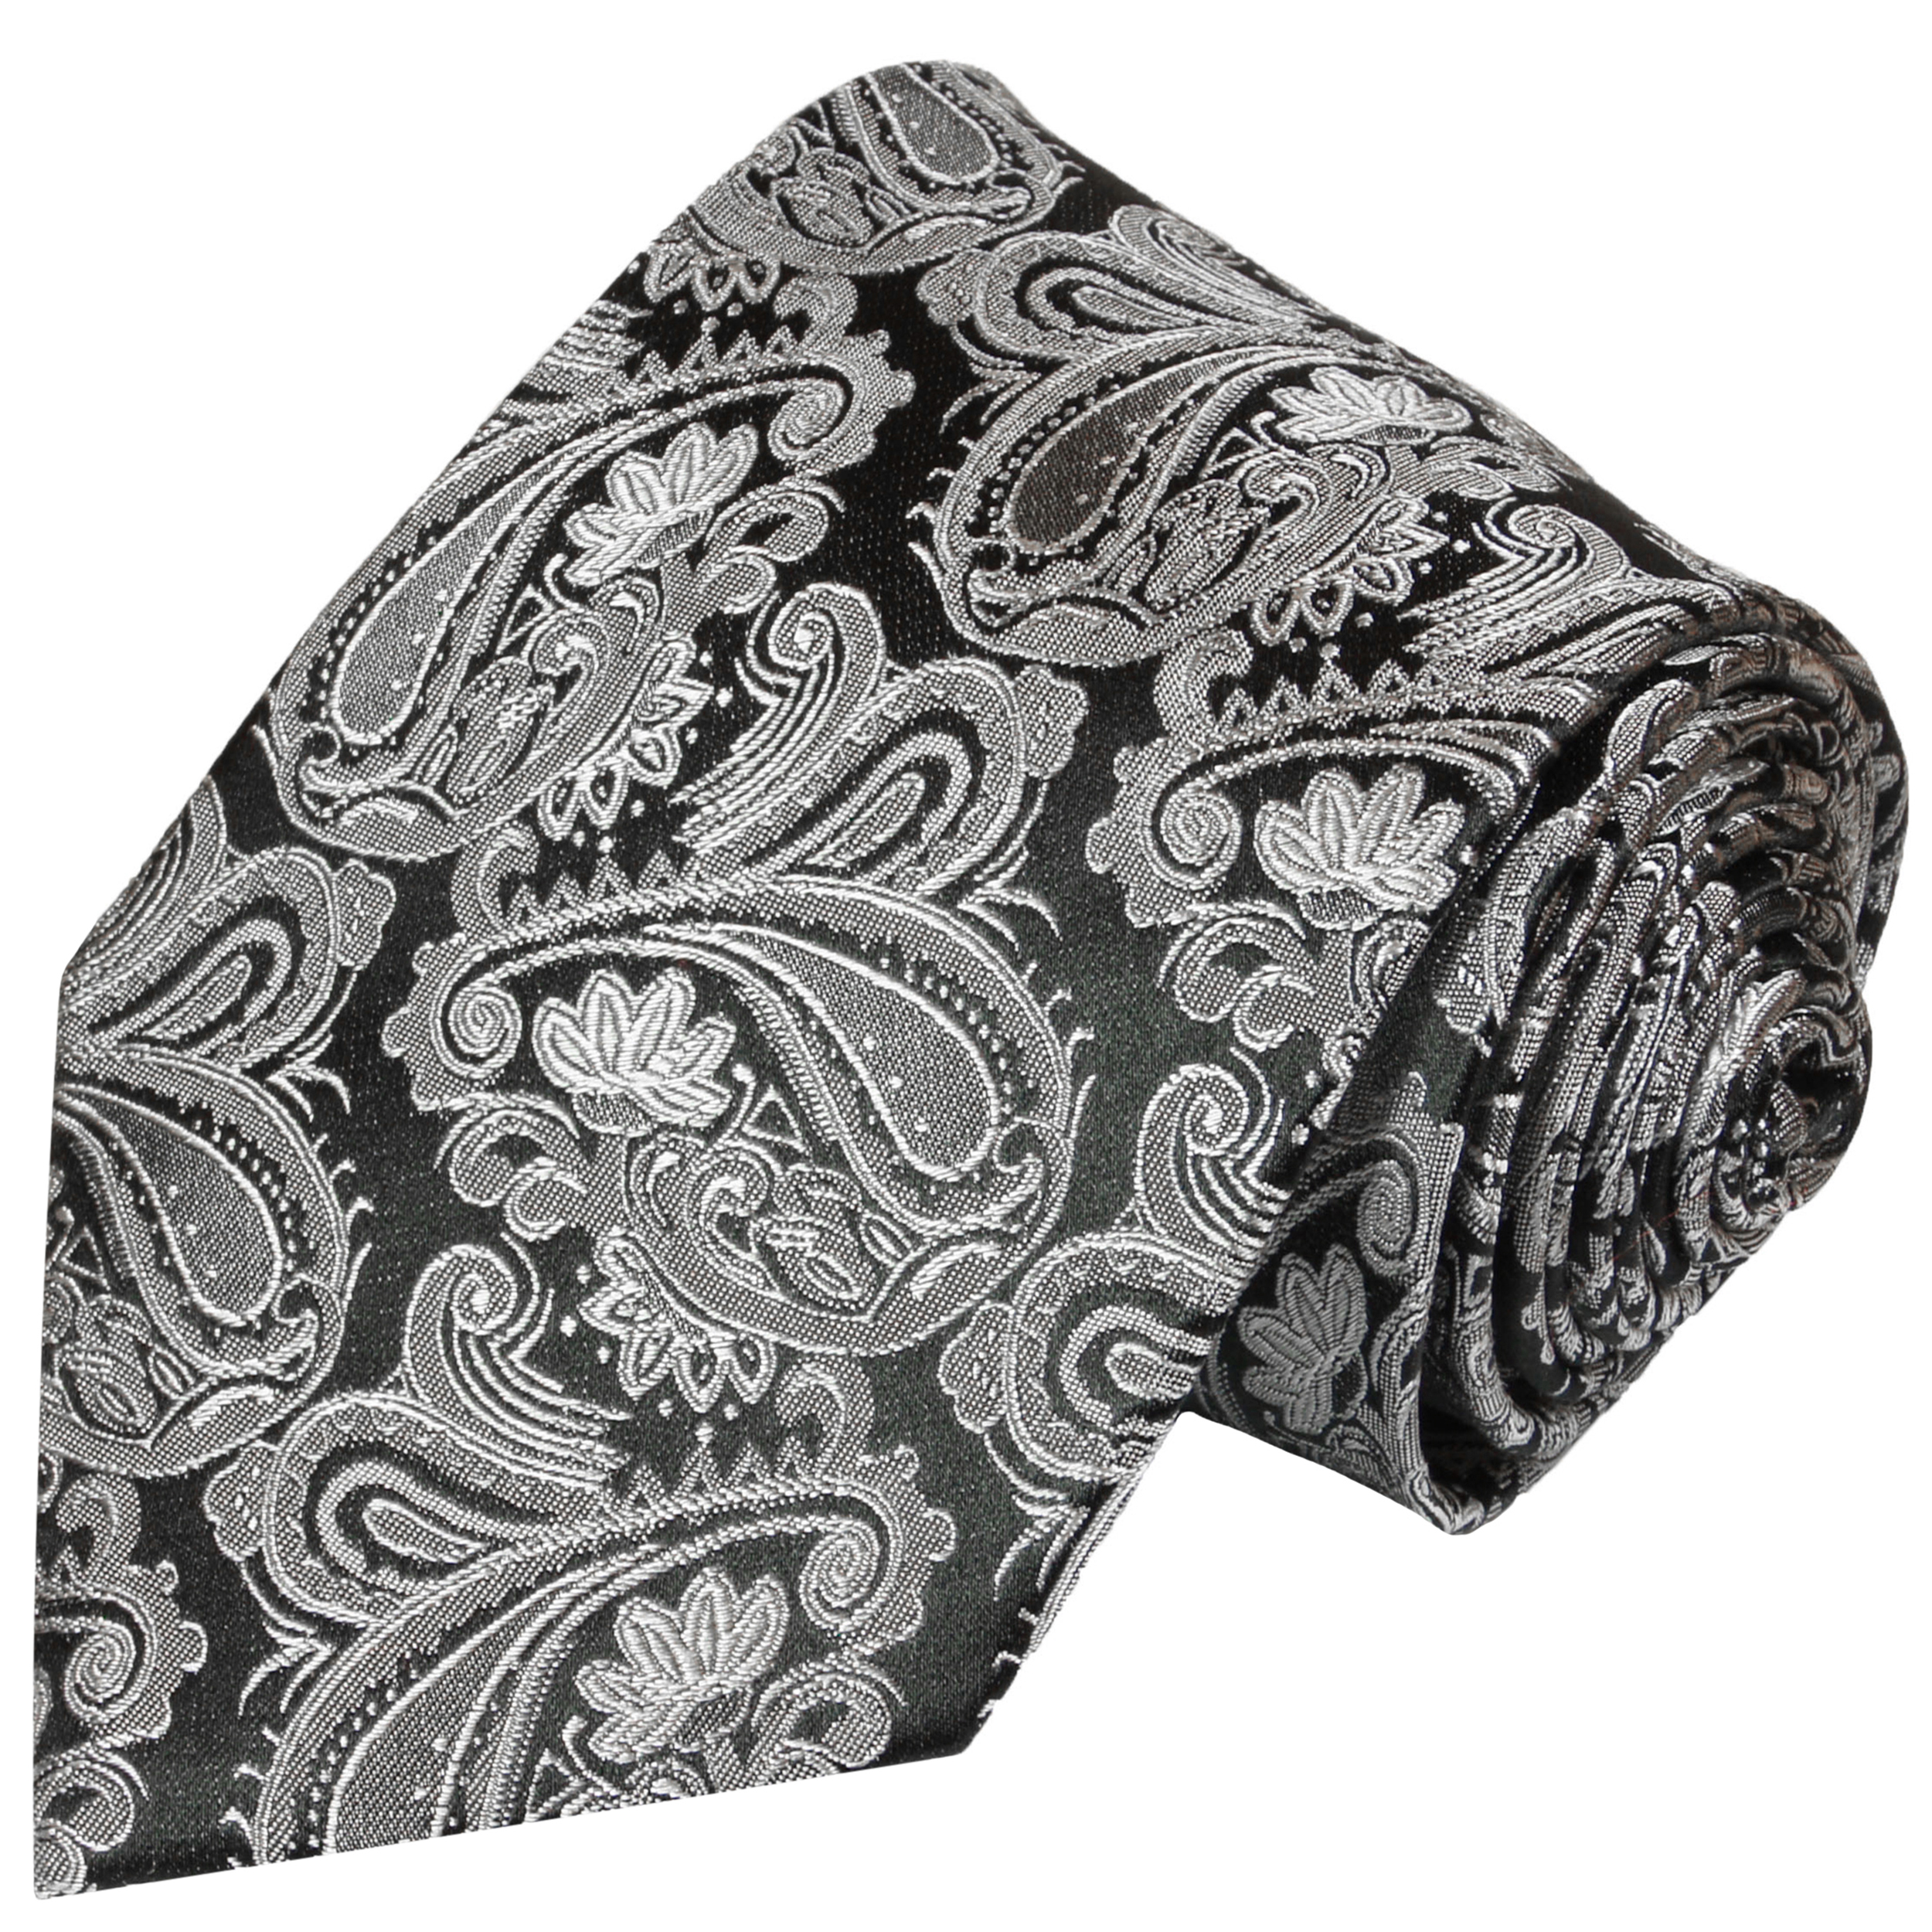 Krawatte grau schwarz paisley | JETZT BESTELLEN - Paul Malone Shop